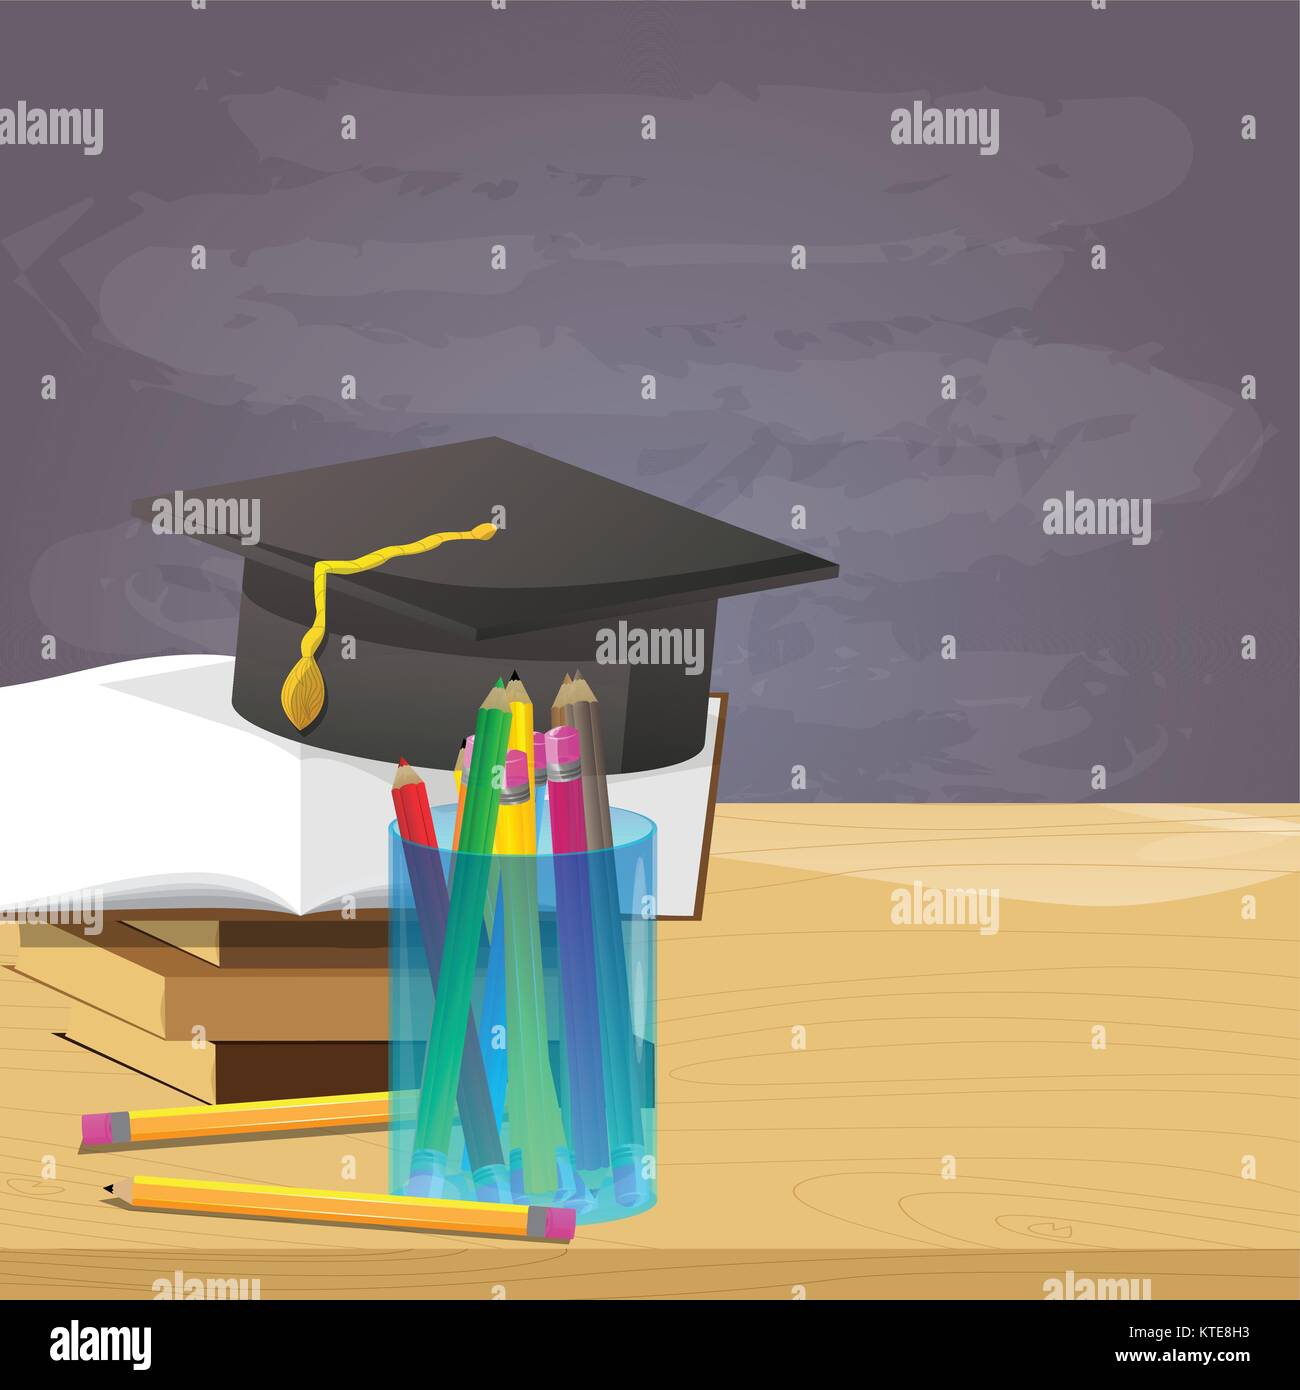 School books pencil and graduation cap, blackboard on the background, education concept. Vector cartoon style illustration. Stock Vector